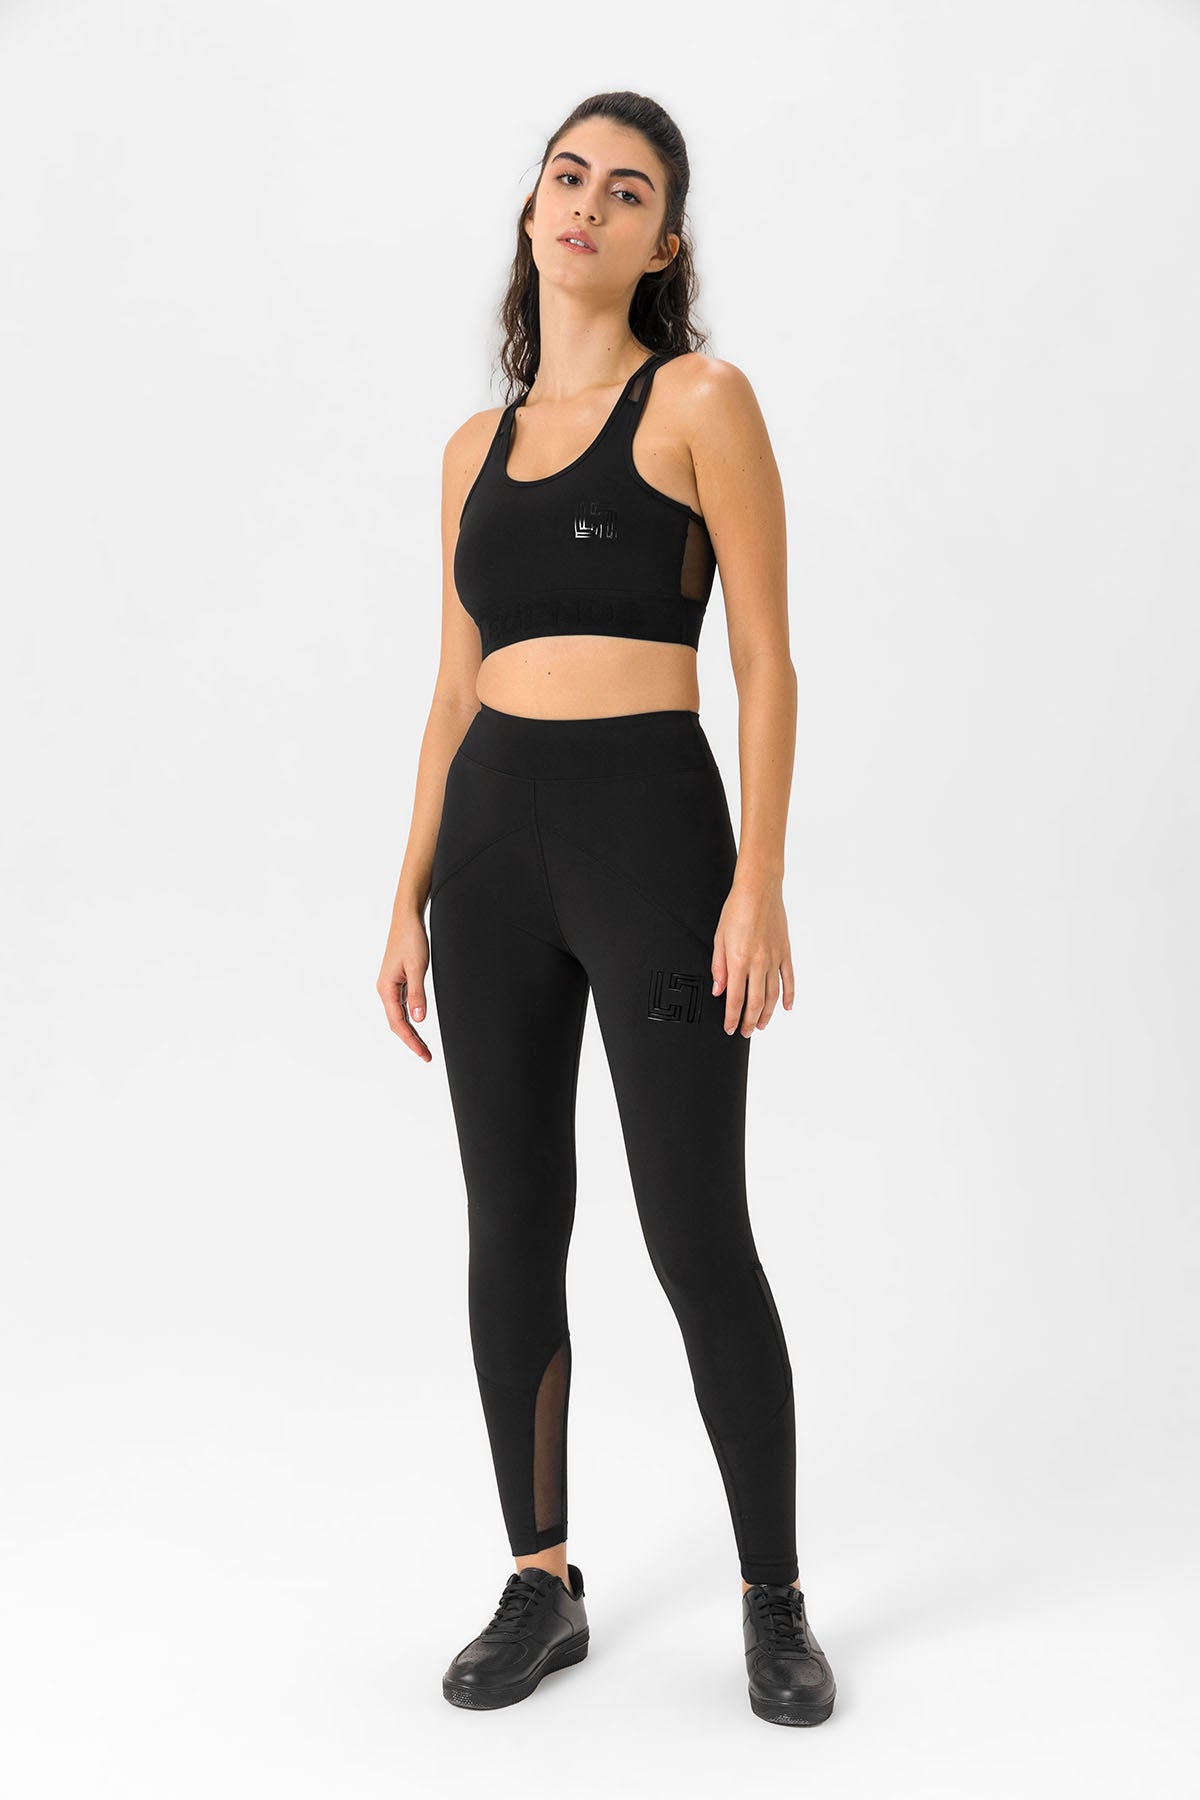 & Brand – SET Clothing Basic Black Endurance LEGENDS Bra Tight Sports